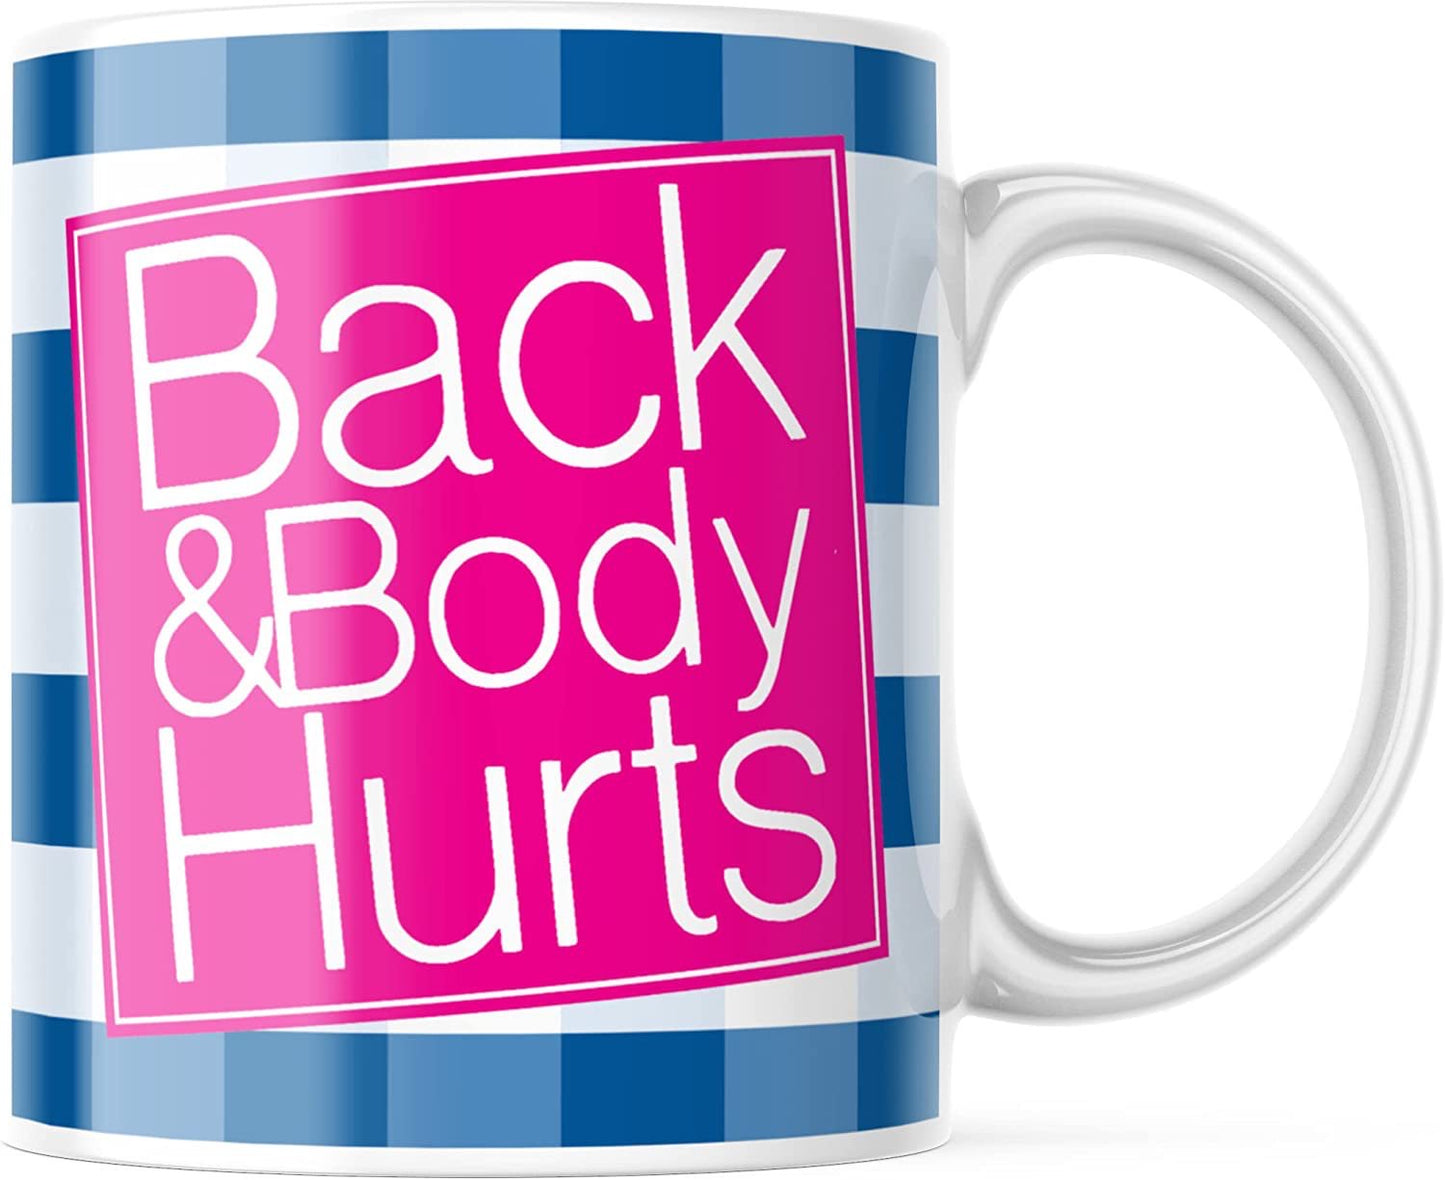 Back and Body Hurts Coffee Mug